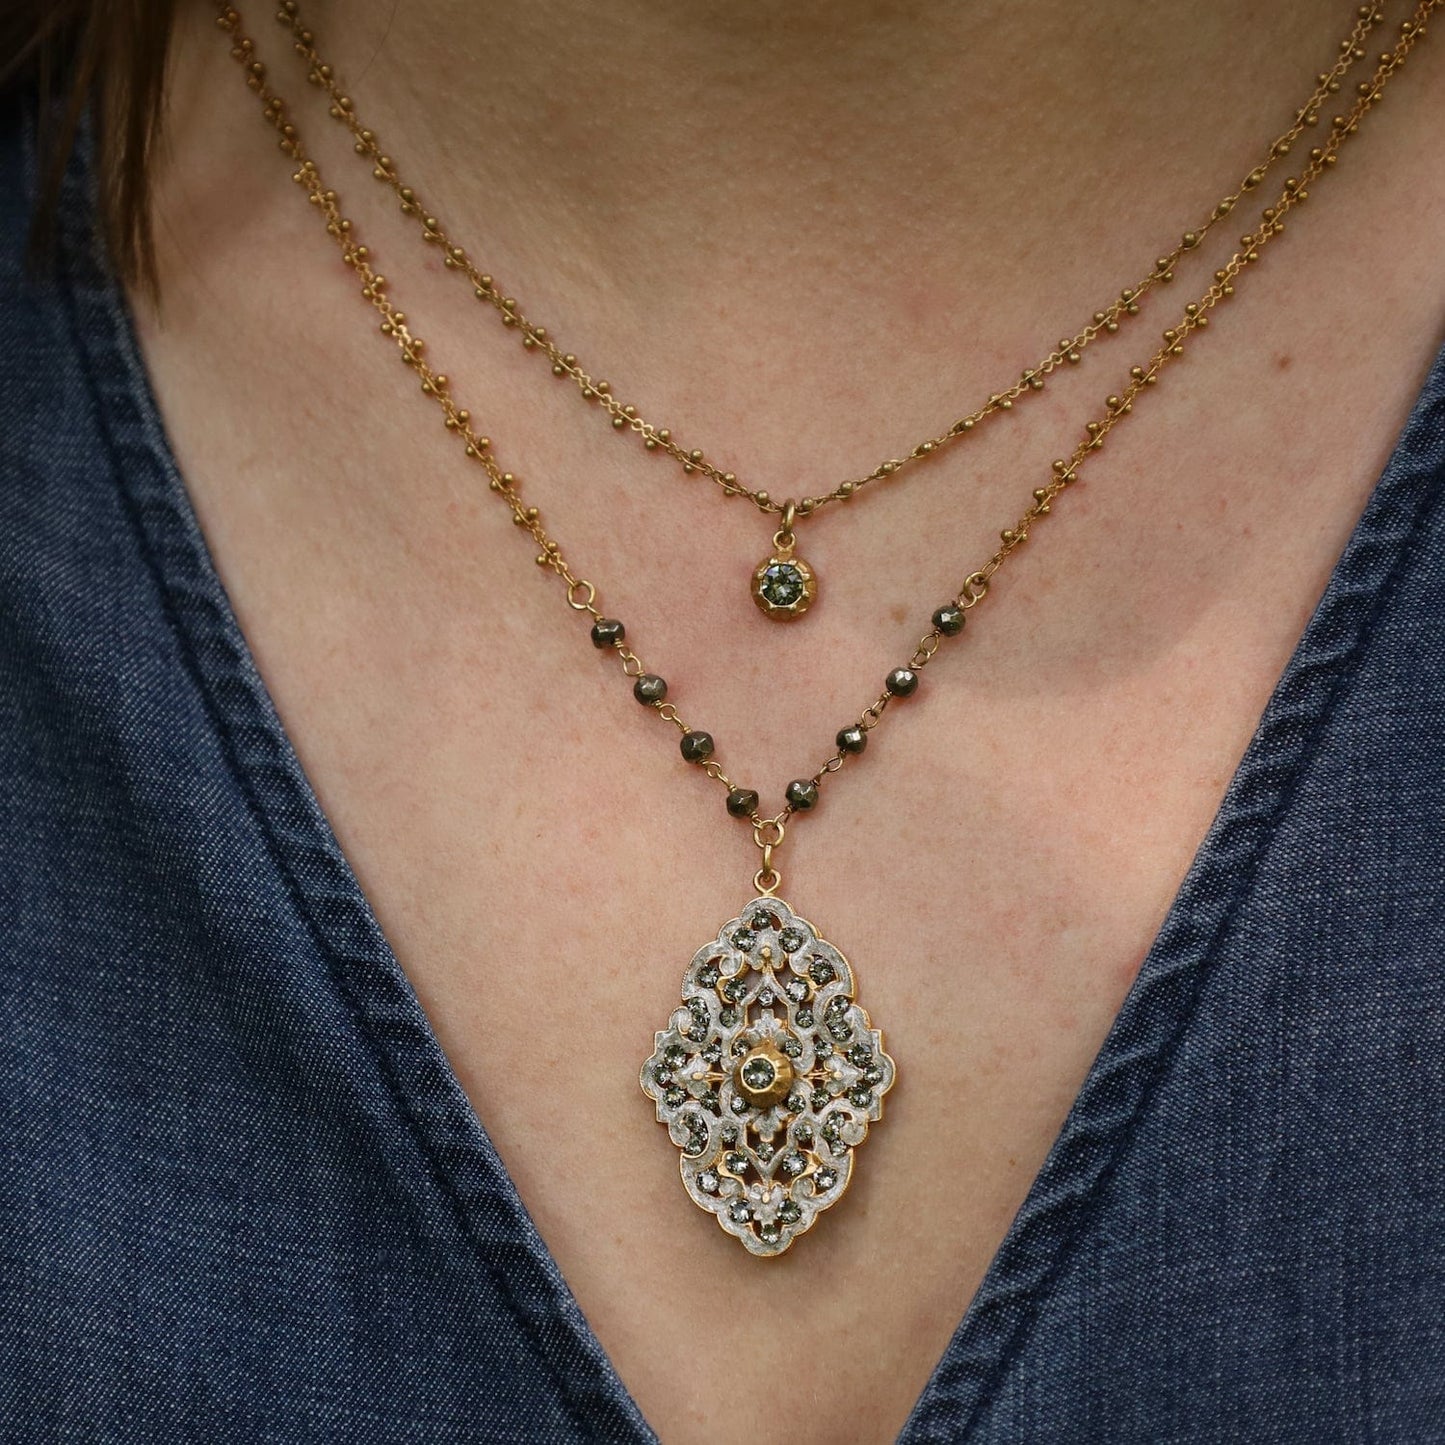 NKL-JM Delicate Stone Necklace